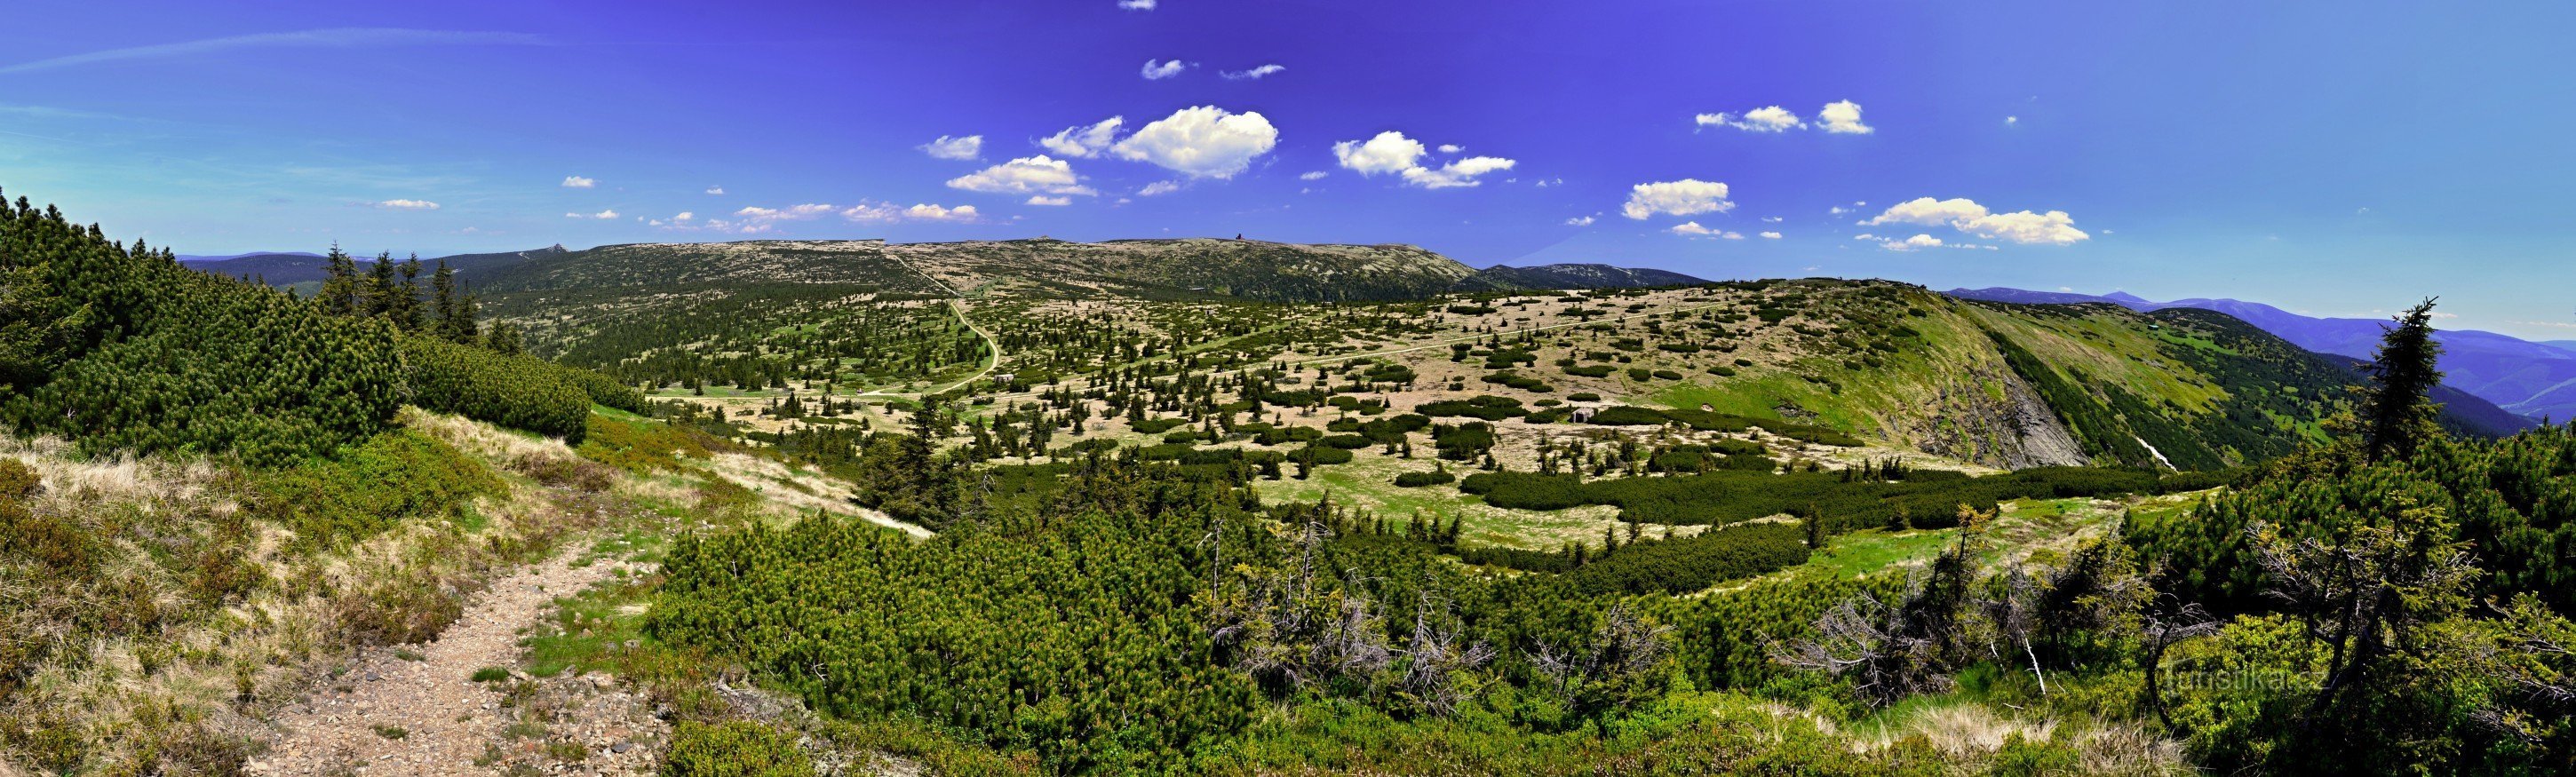 Krkonoše: panorama di Krkonoše da Kotle